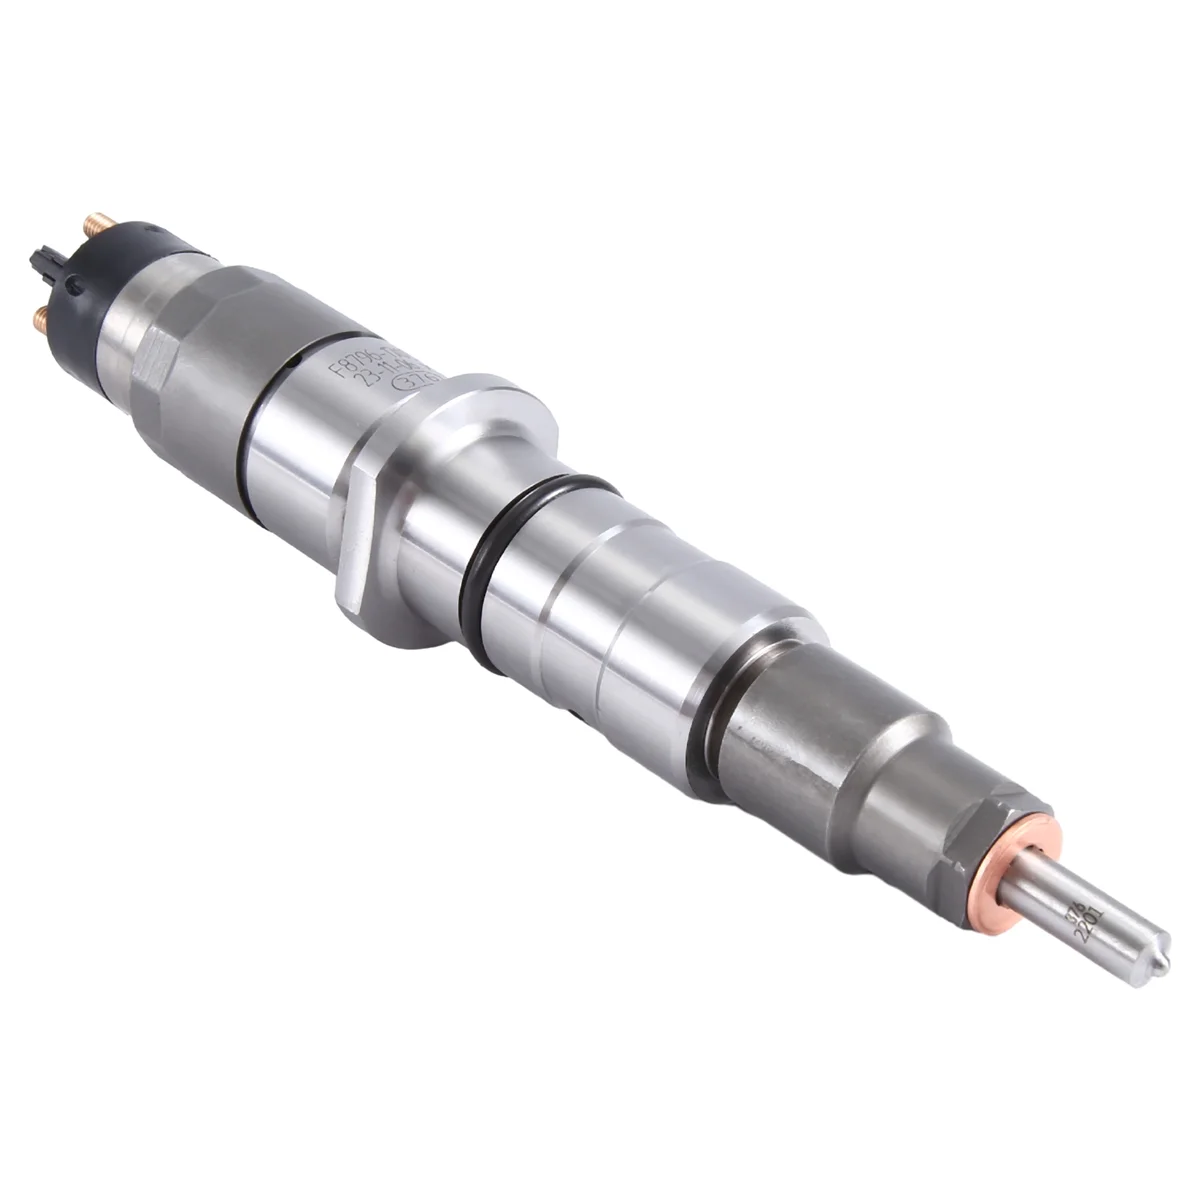 

0445120237 New Diesel Fuel Injector Nozzle for Cummins Isl Isc 8.3L 2003-2013